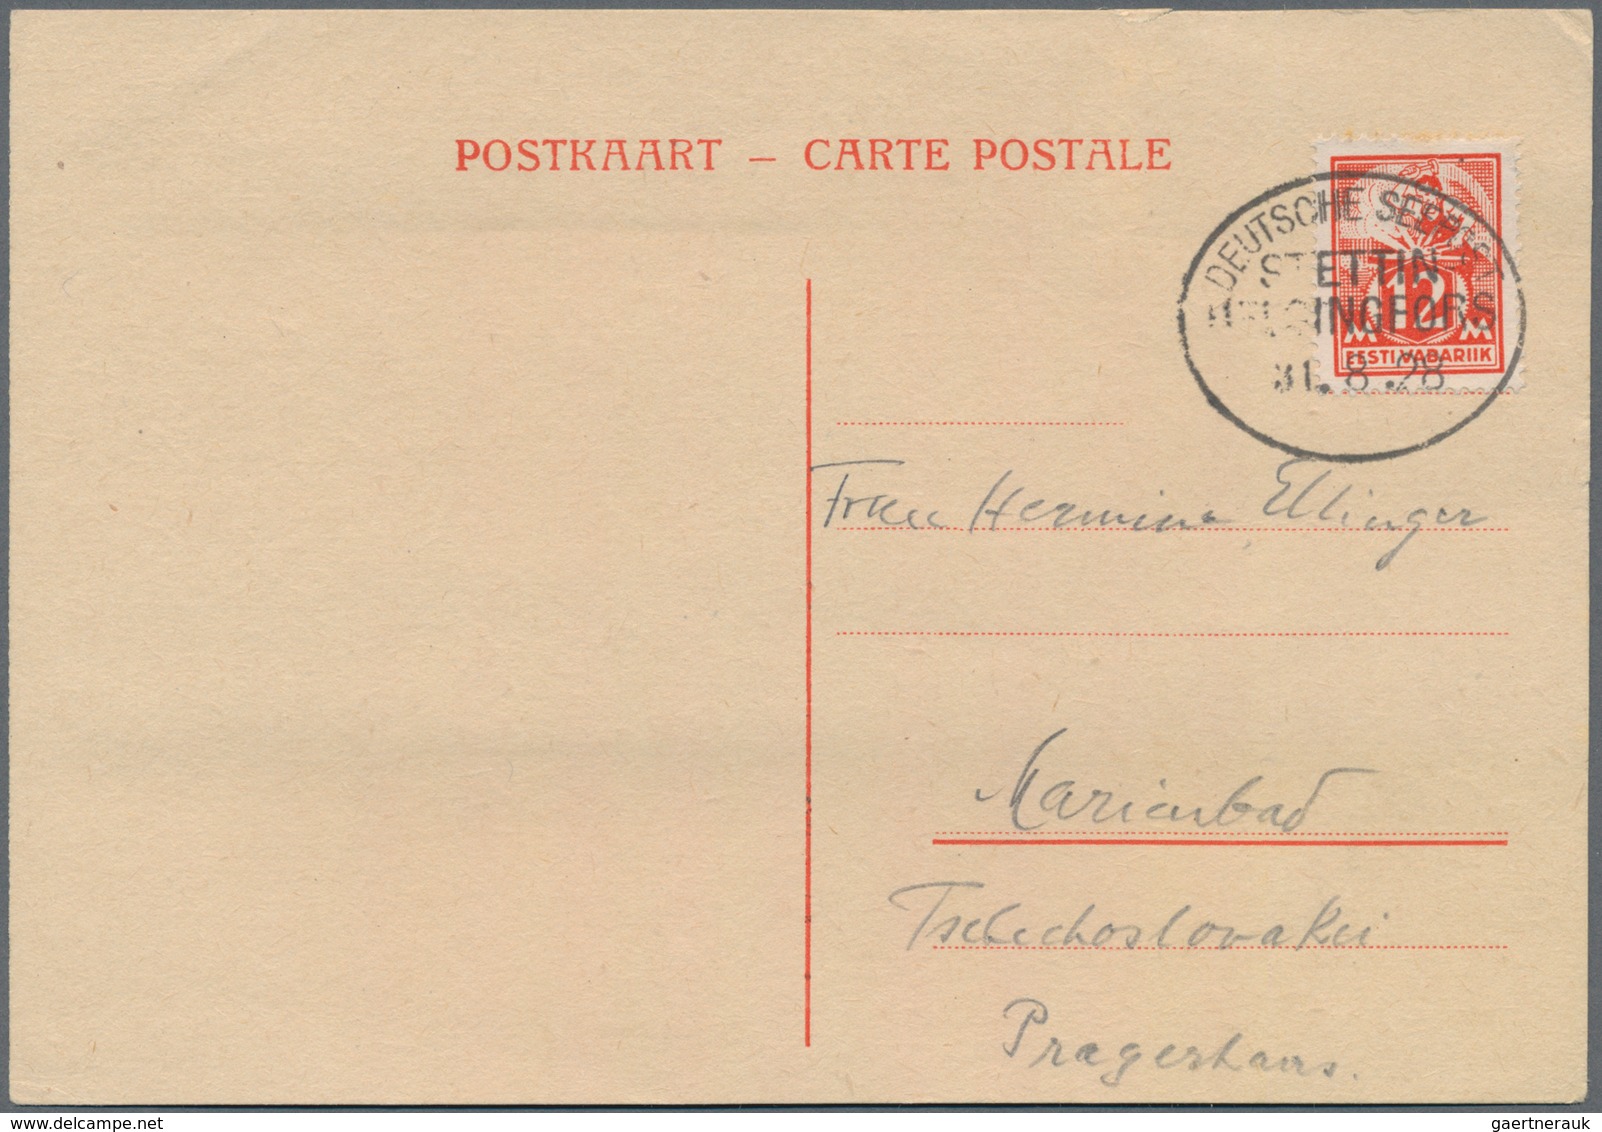 Estland: 1928, "DEUTSCHE SEEPOST / STETTIN-HELDINGFORS 31.8.28" On Postcard With Content Sent To Mar - Estland